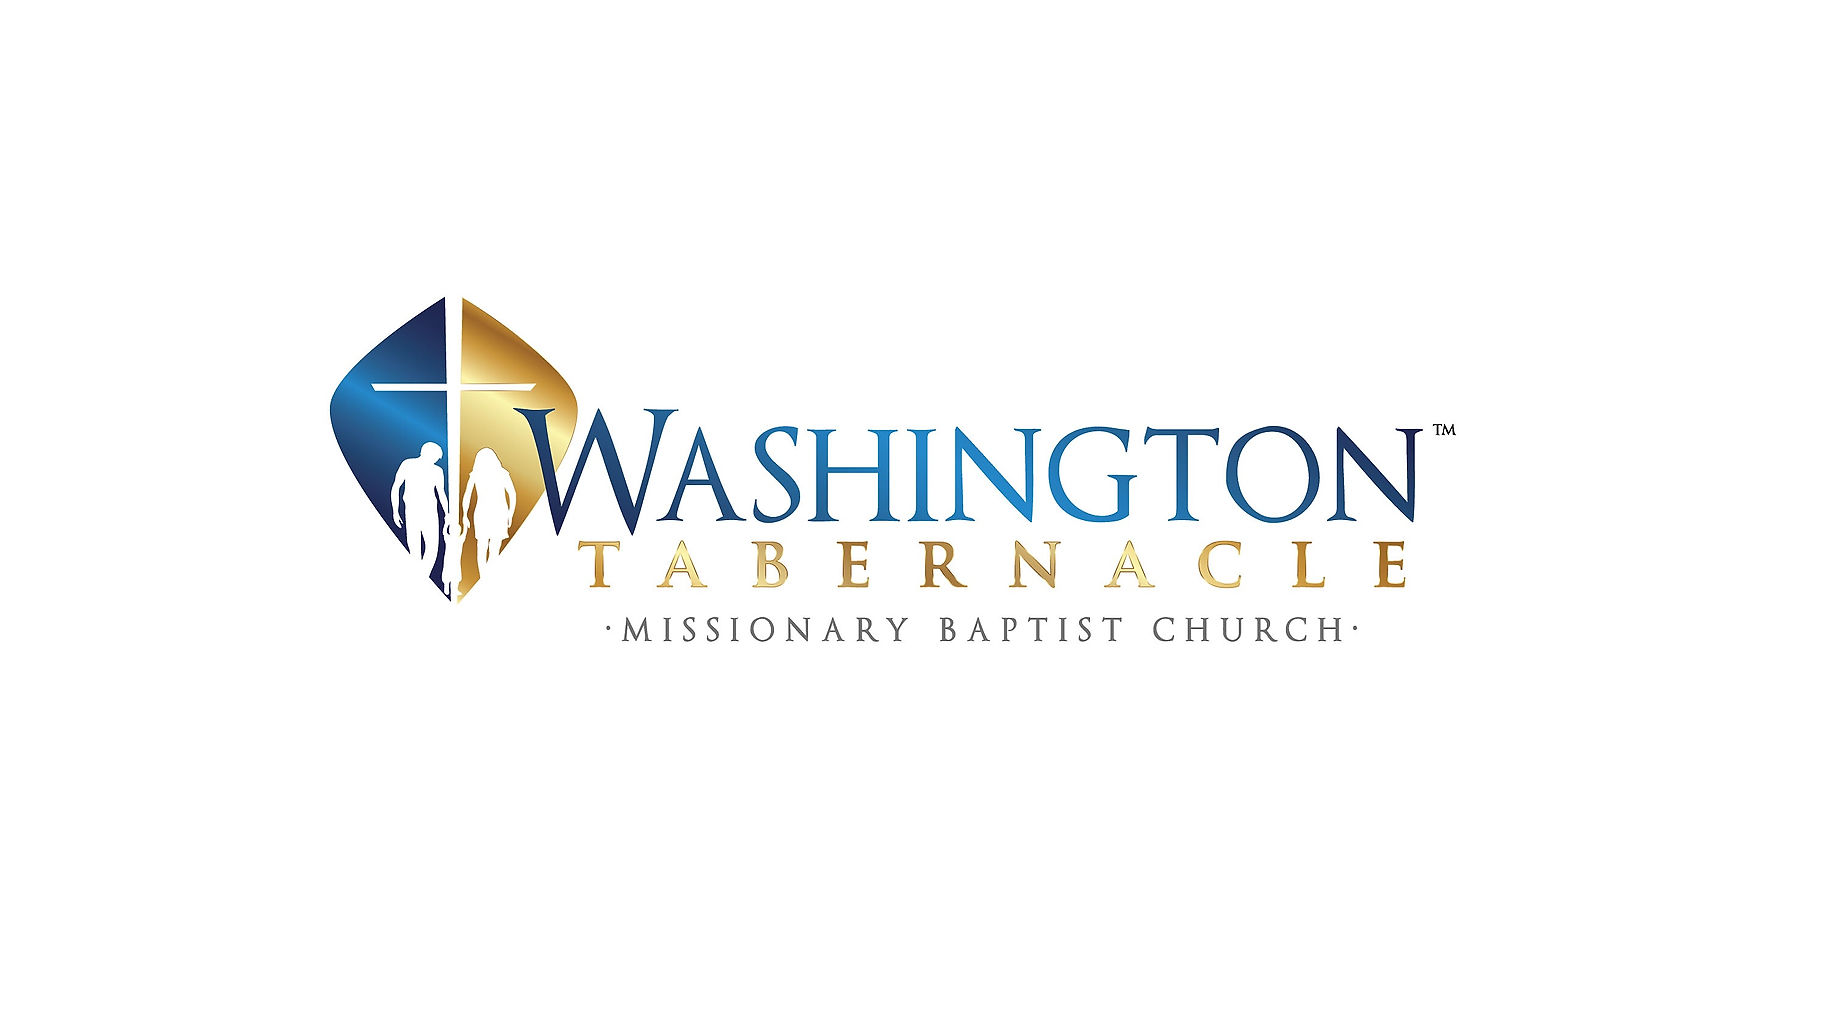 Washington Tabernacle M.B.C